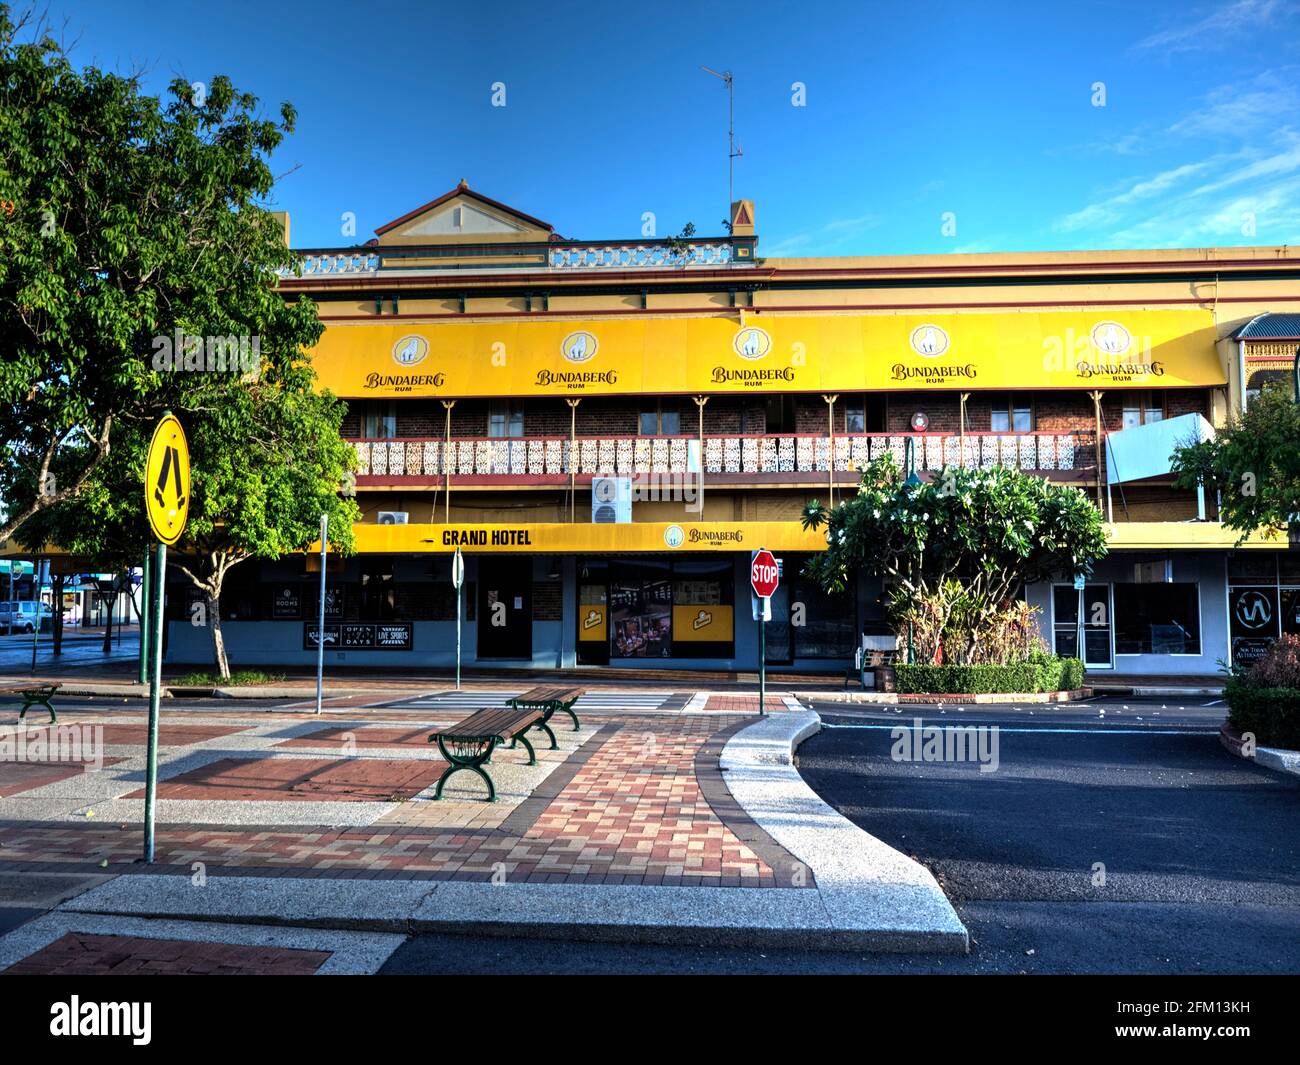 El histórico Grand Hotel (1885) en la calle Bourbong Bundaberg Queensland Australia Foto de stock